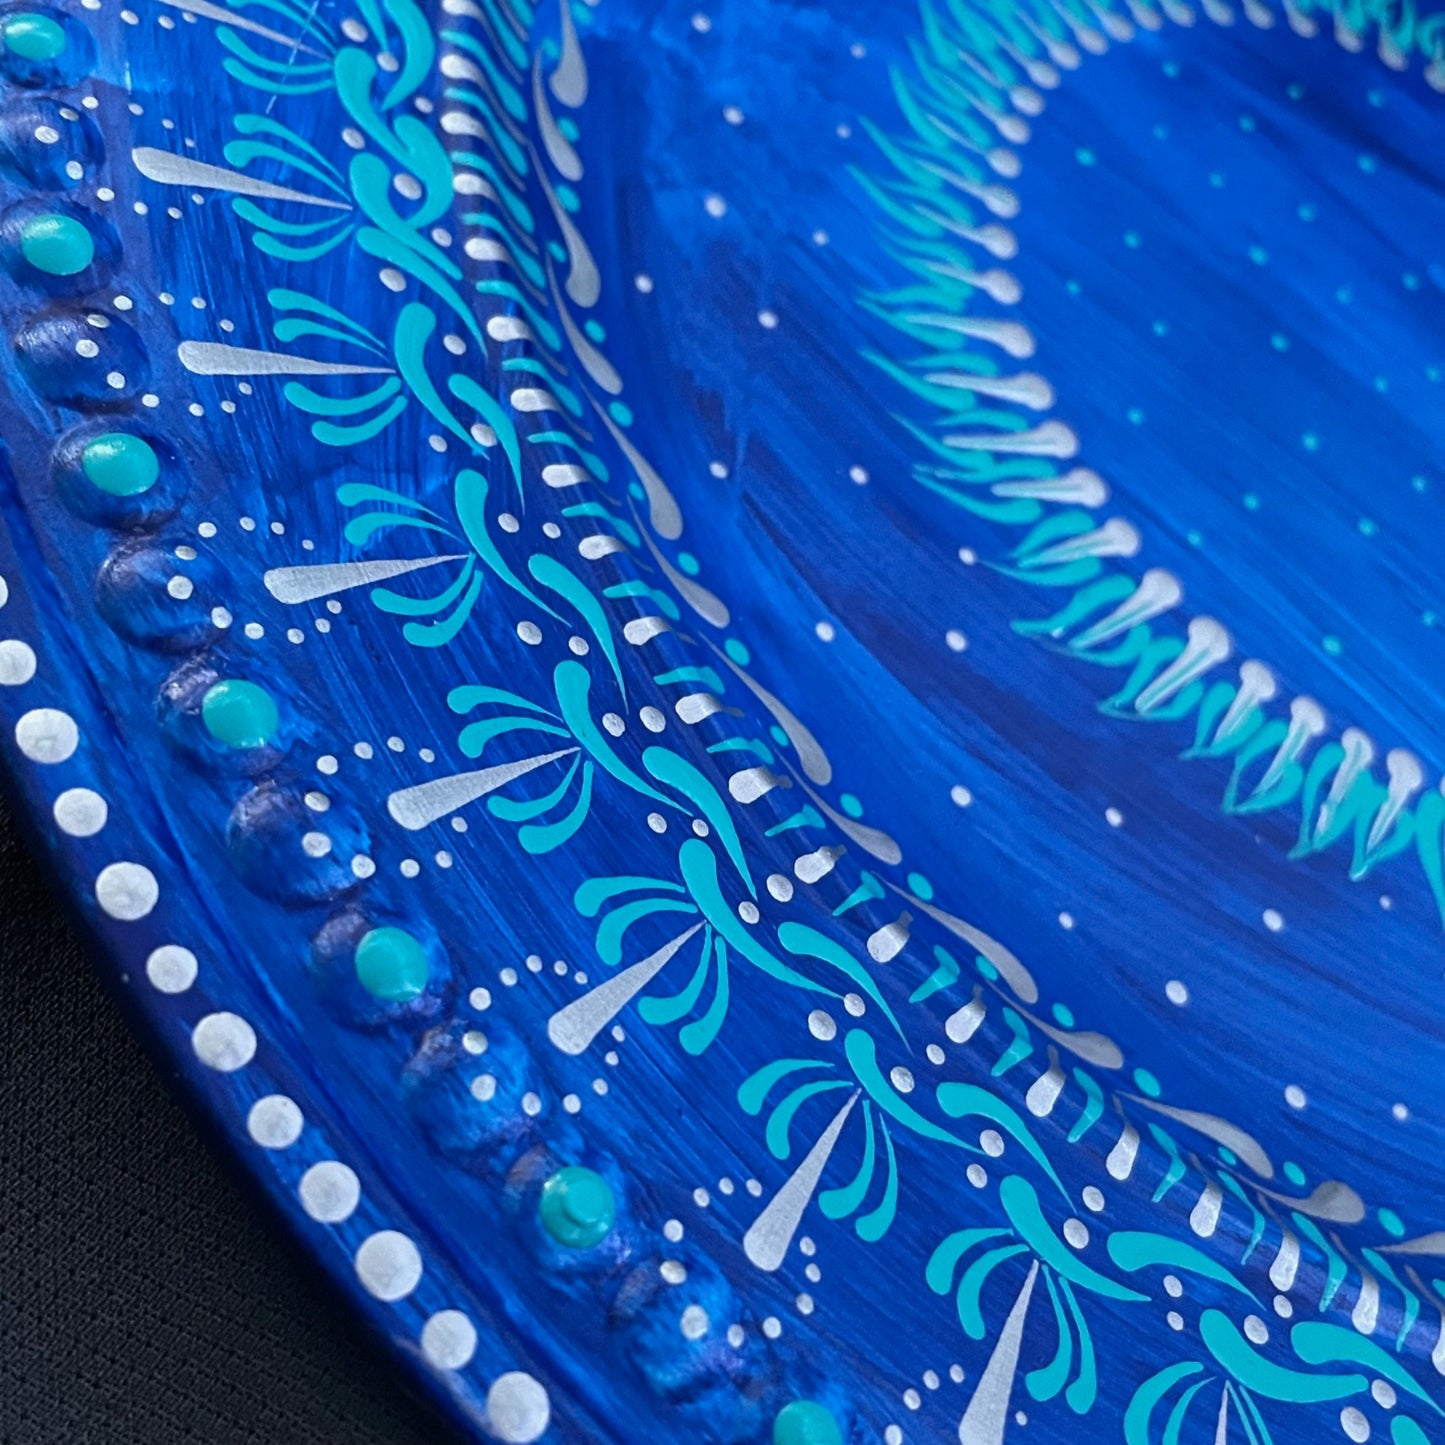 Blue Royalty Decorative Mandala Centerpiece Henna Mehndi Event Charger